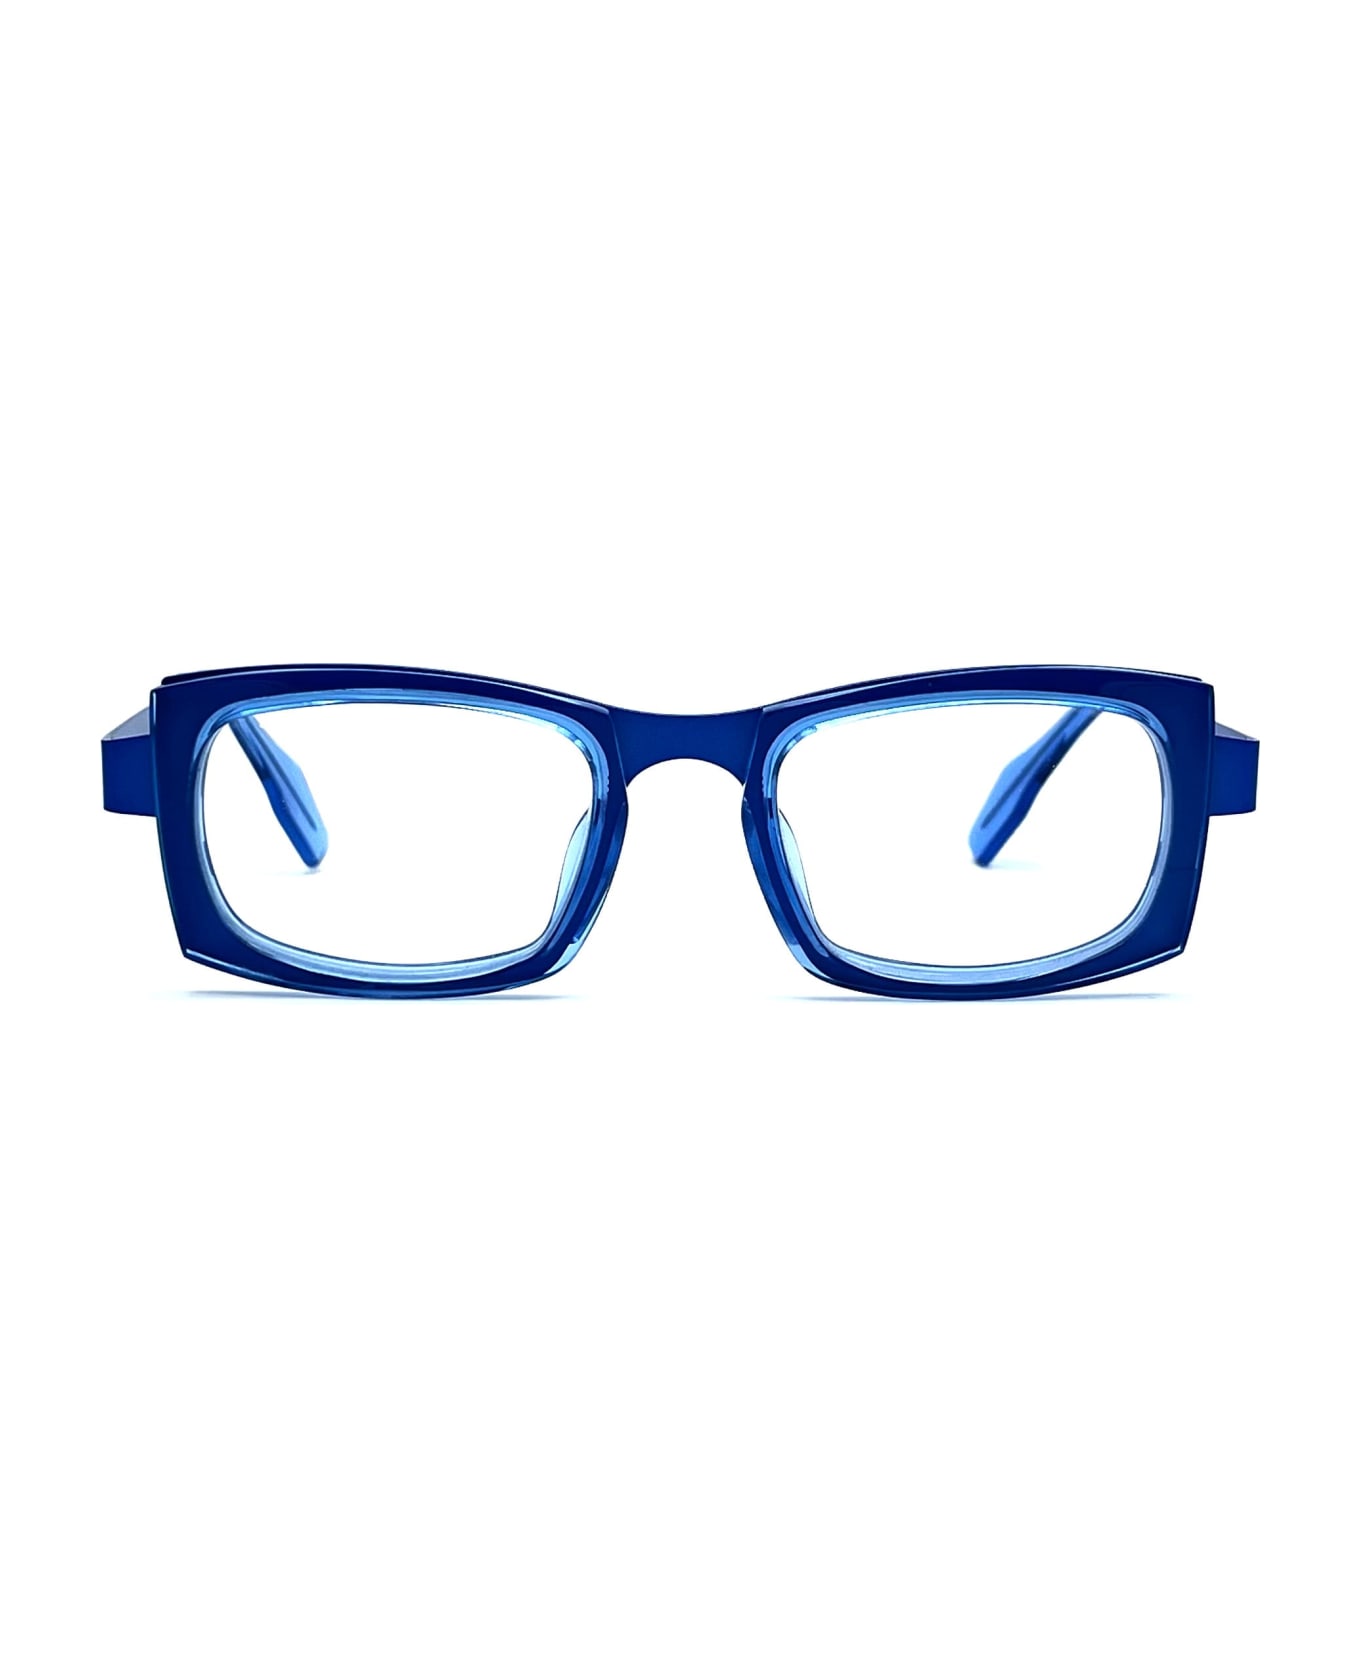 Theo Eyewear Maui - 7 Glasses - blue